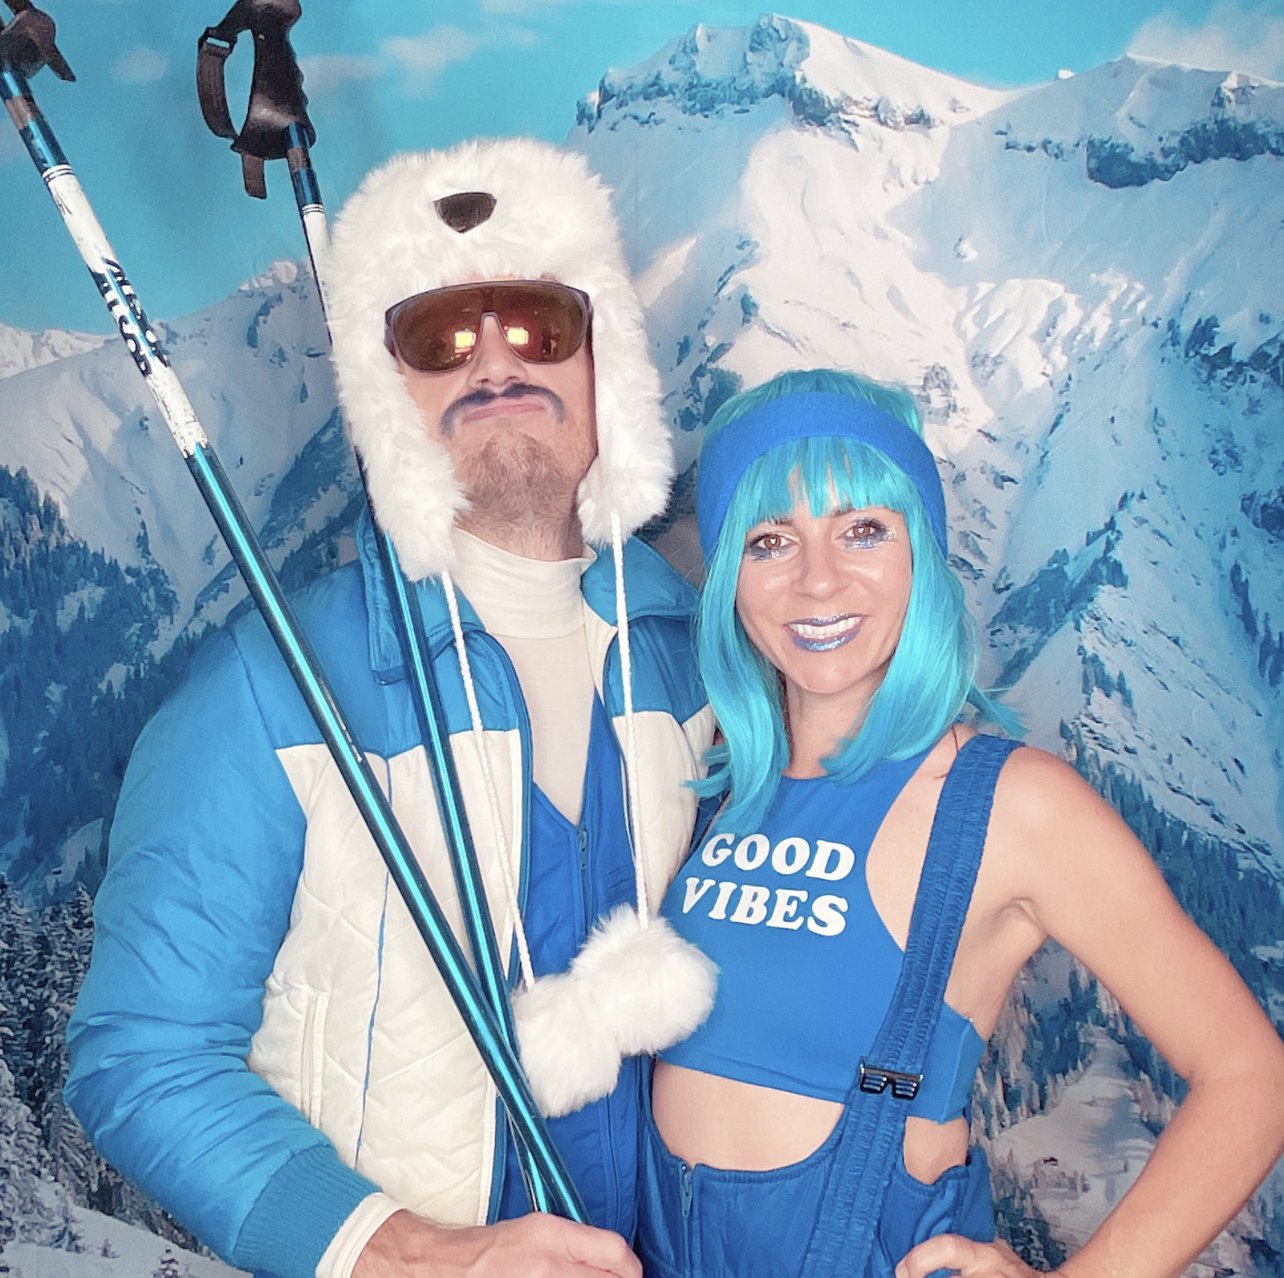 Apres Ski Photo Booth Rental For Winter Wonderland Themed Holiday